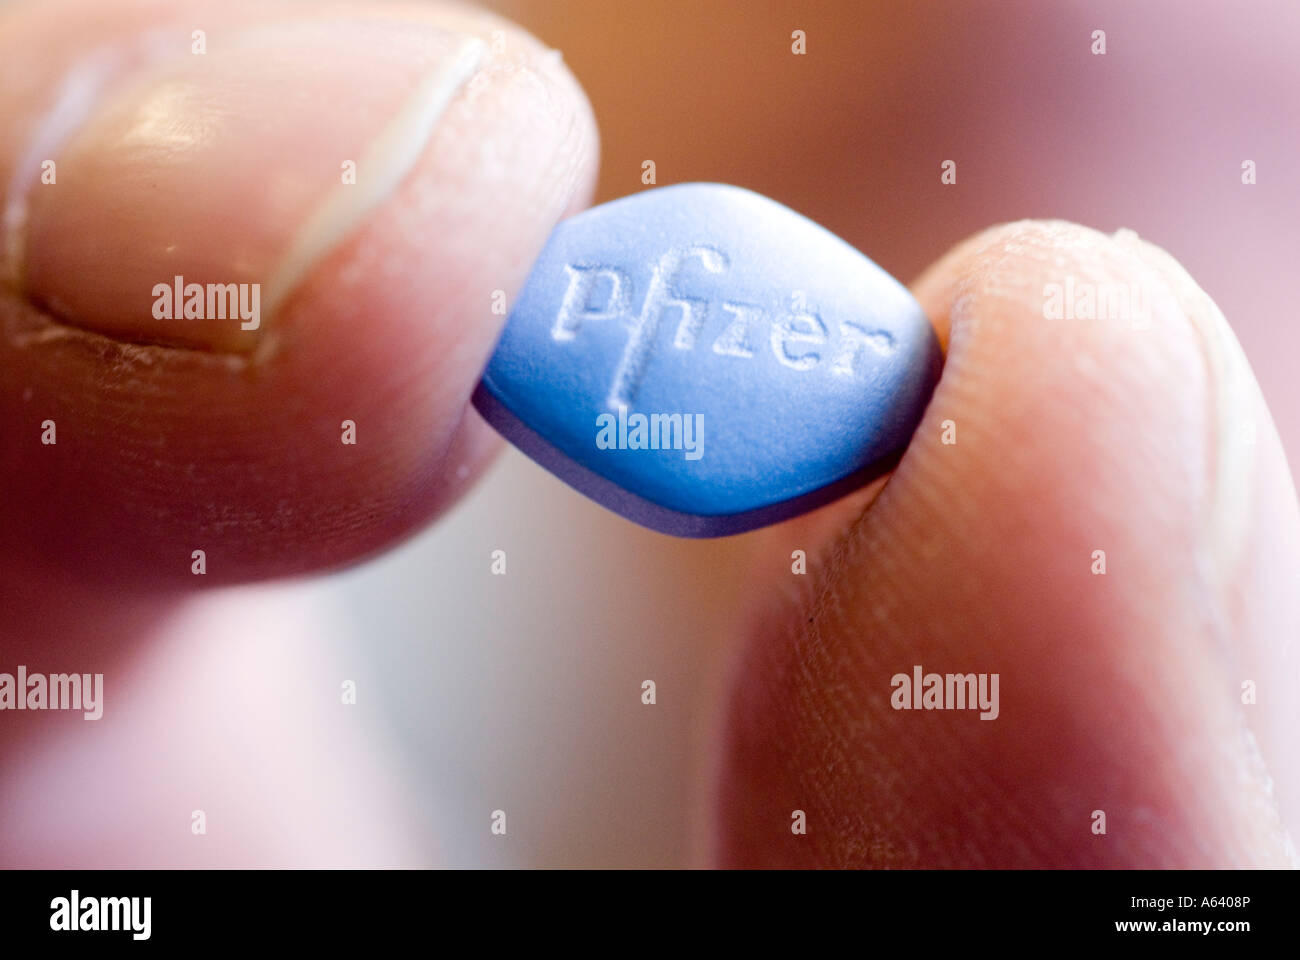 Pfizer Viagra tablet Stock Photo